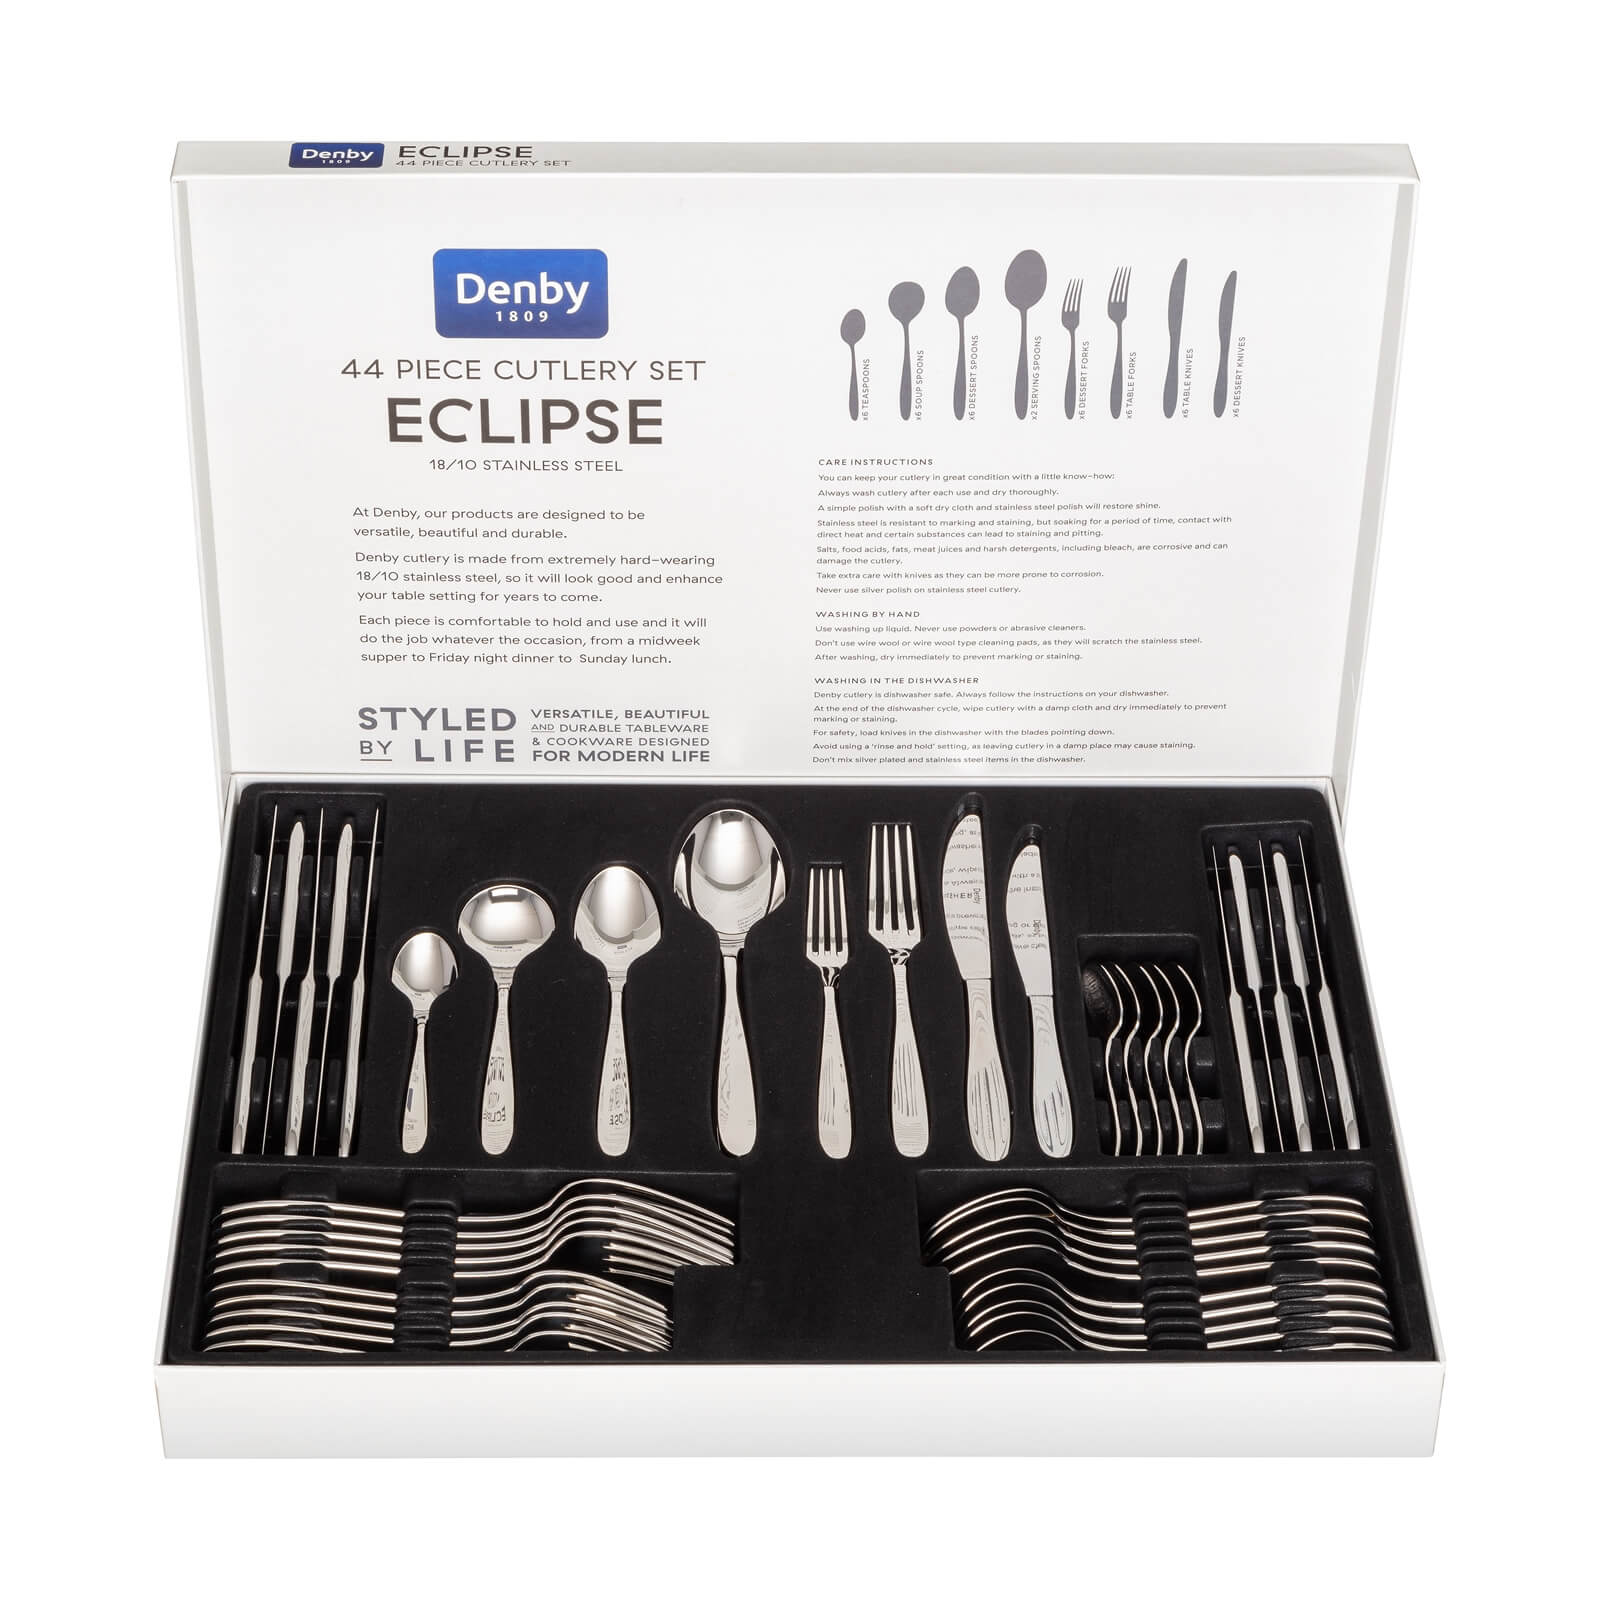 Denby Eclipse Cutlery Set - 44 Pieces